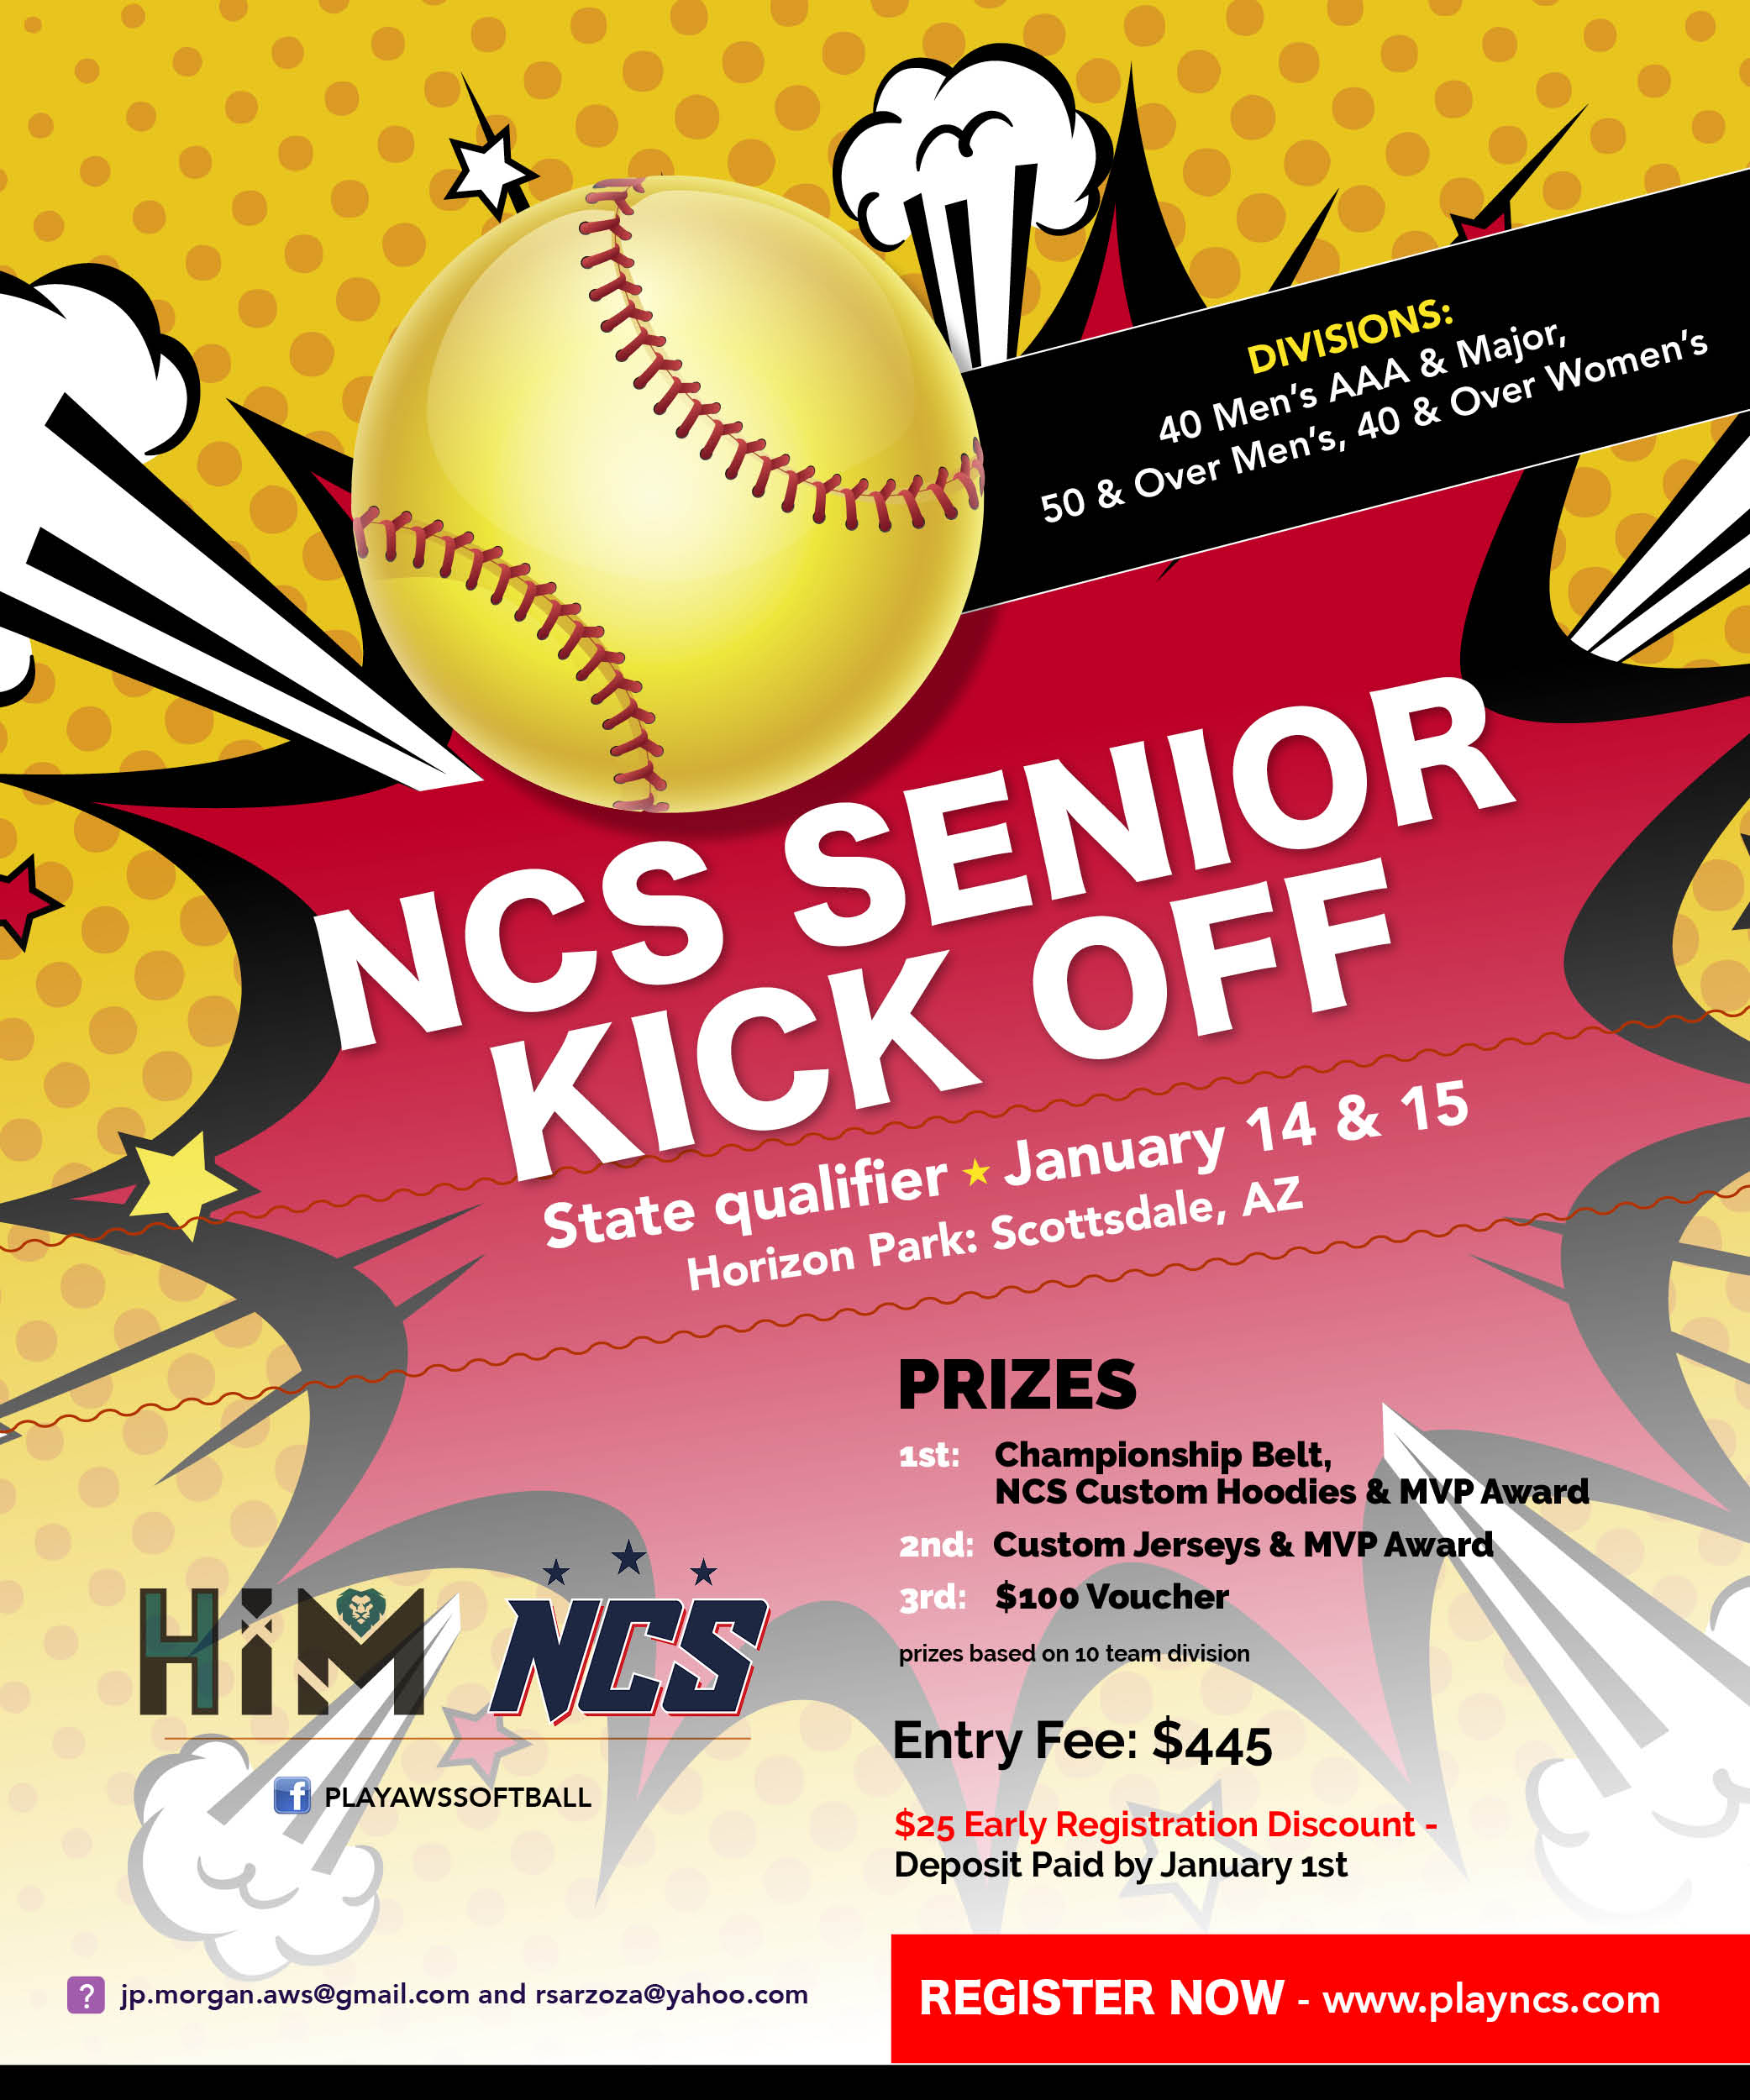 NCS Senior Kickoff - State Qualifier Logo